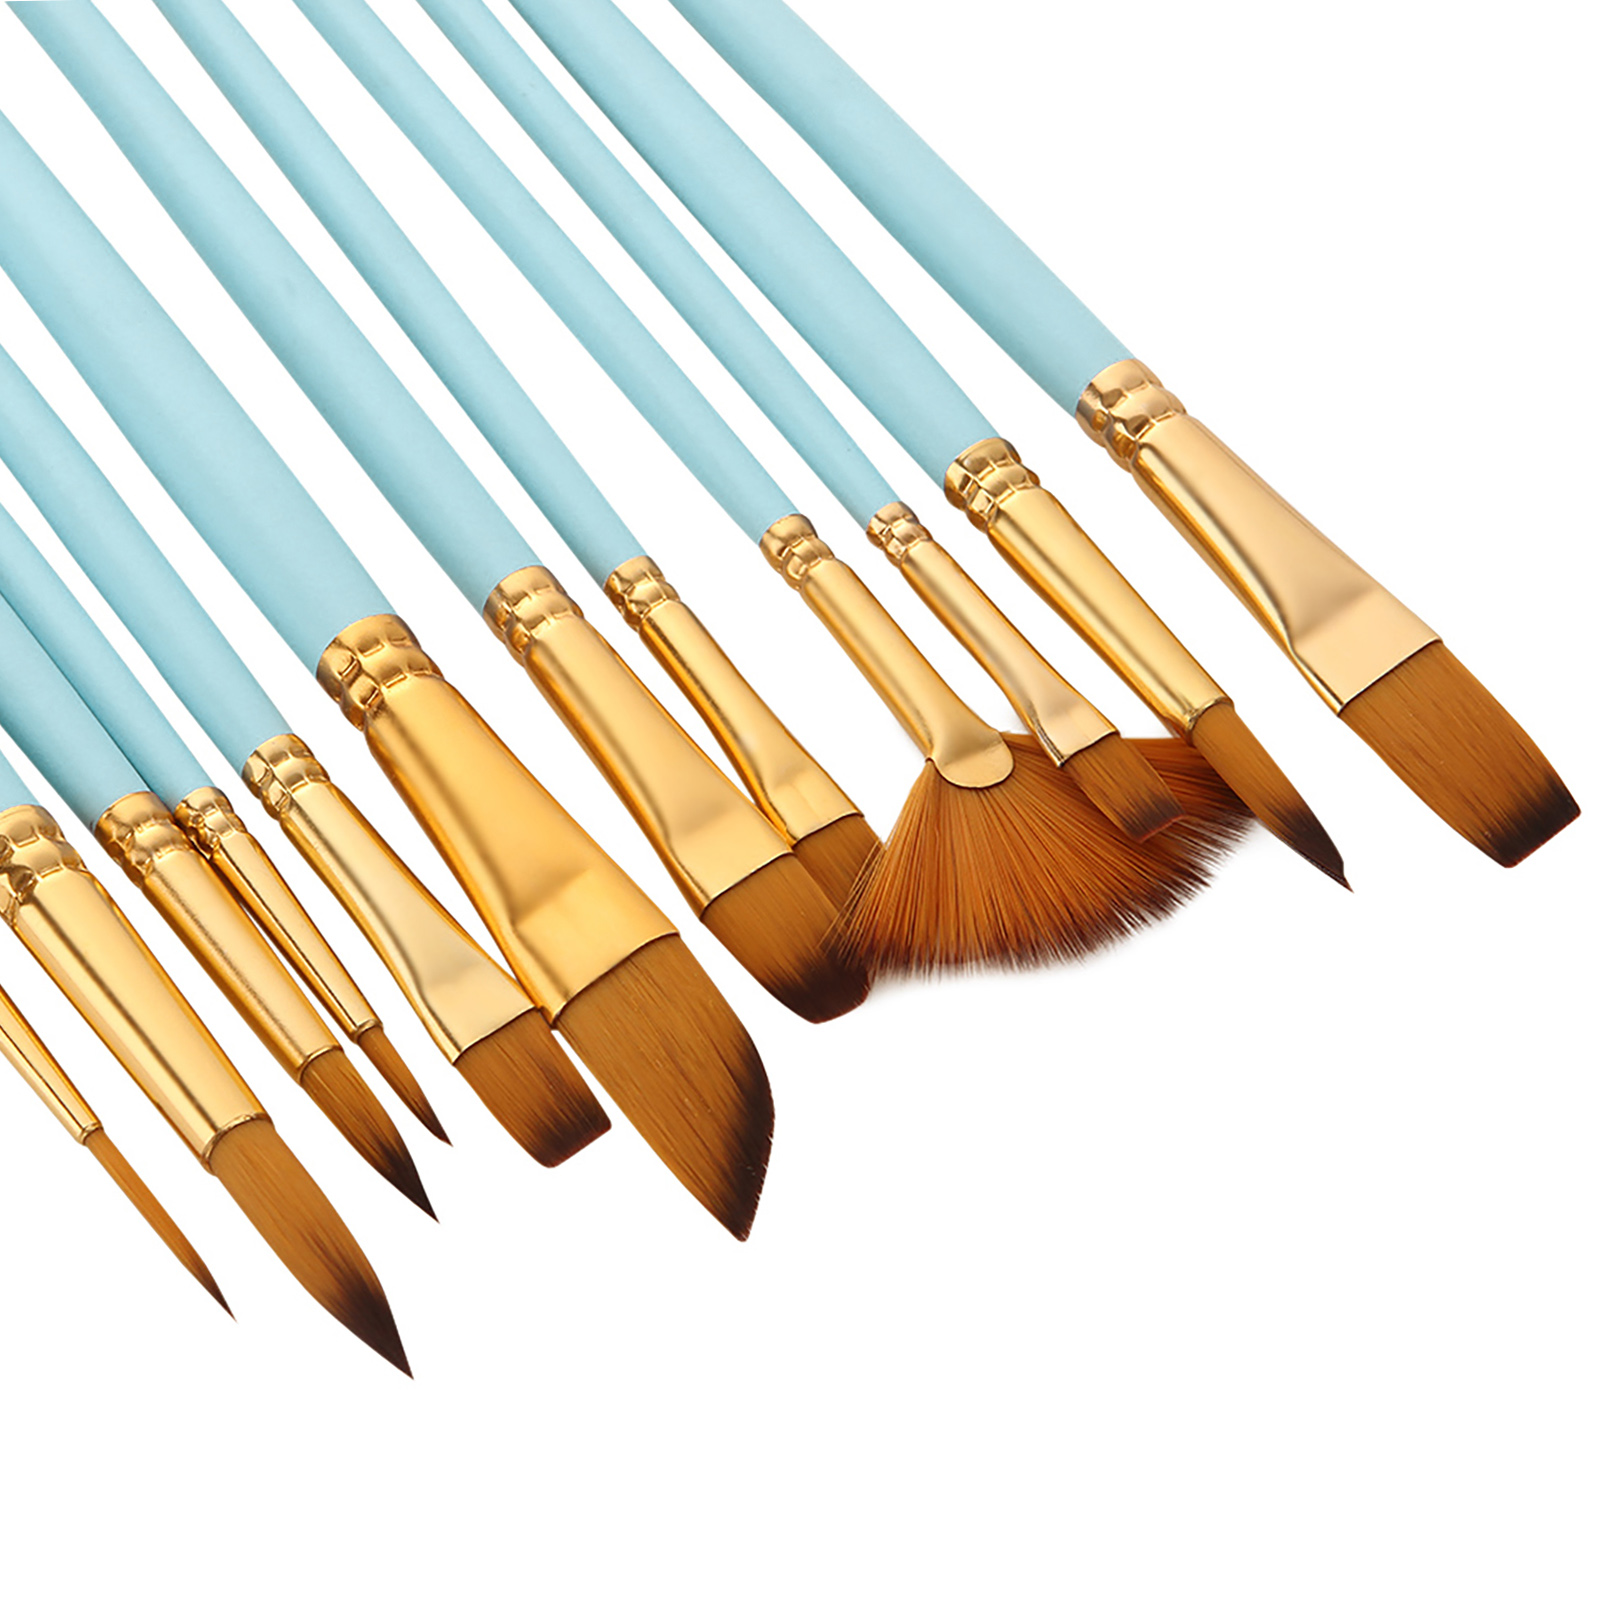 12Pcs Fine Detail Paint Brush Set Double Color Taklon Hair Paintbrushes for Miniature Acrylic Oil Watercolor Painting Beginner Student Artist Drawing Kits